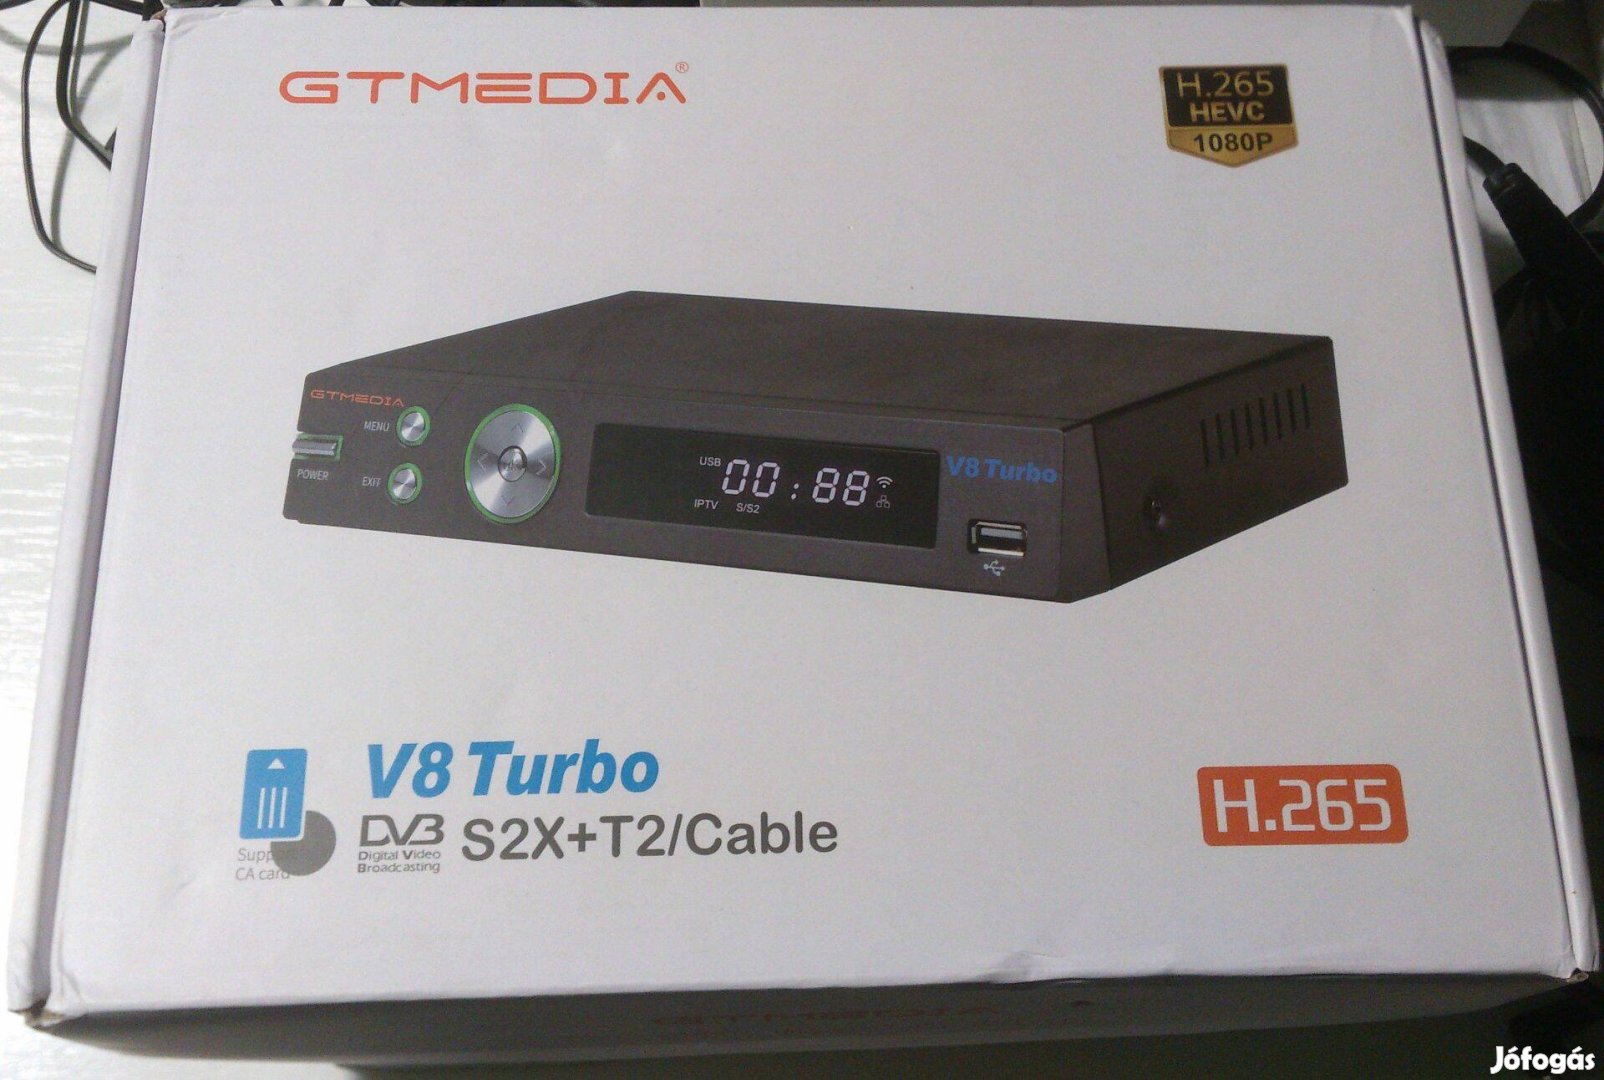 Gtmedia V8 Turbo földi, műholdas, kábel TV vevőkészülék,tuner, STB